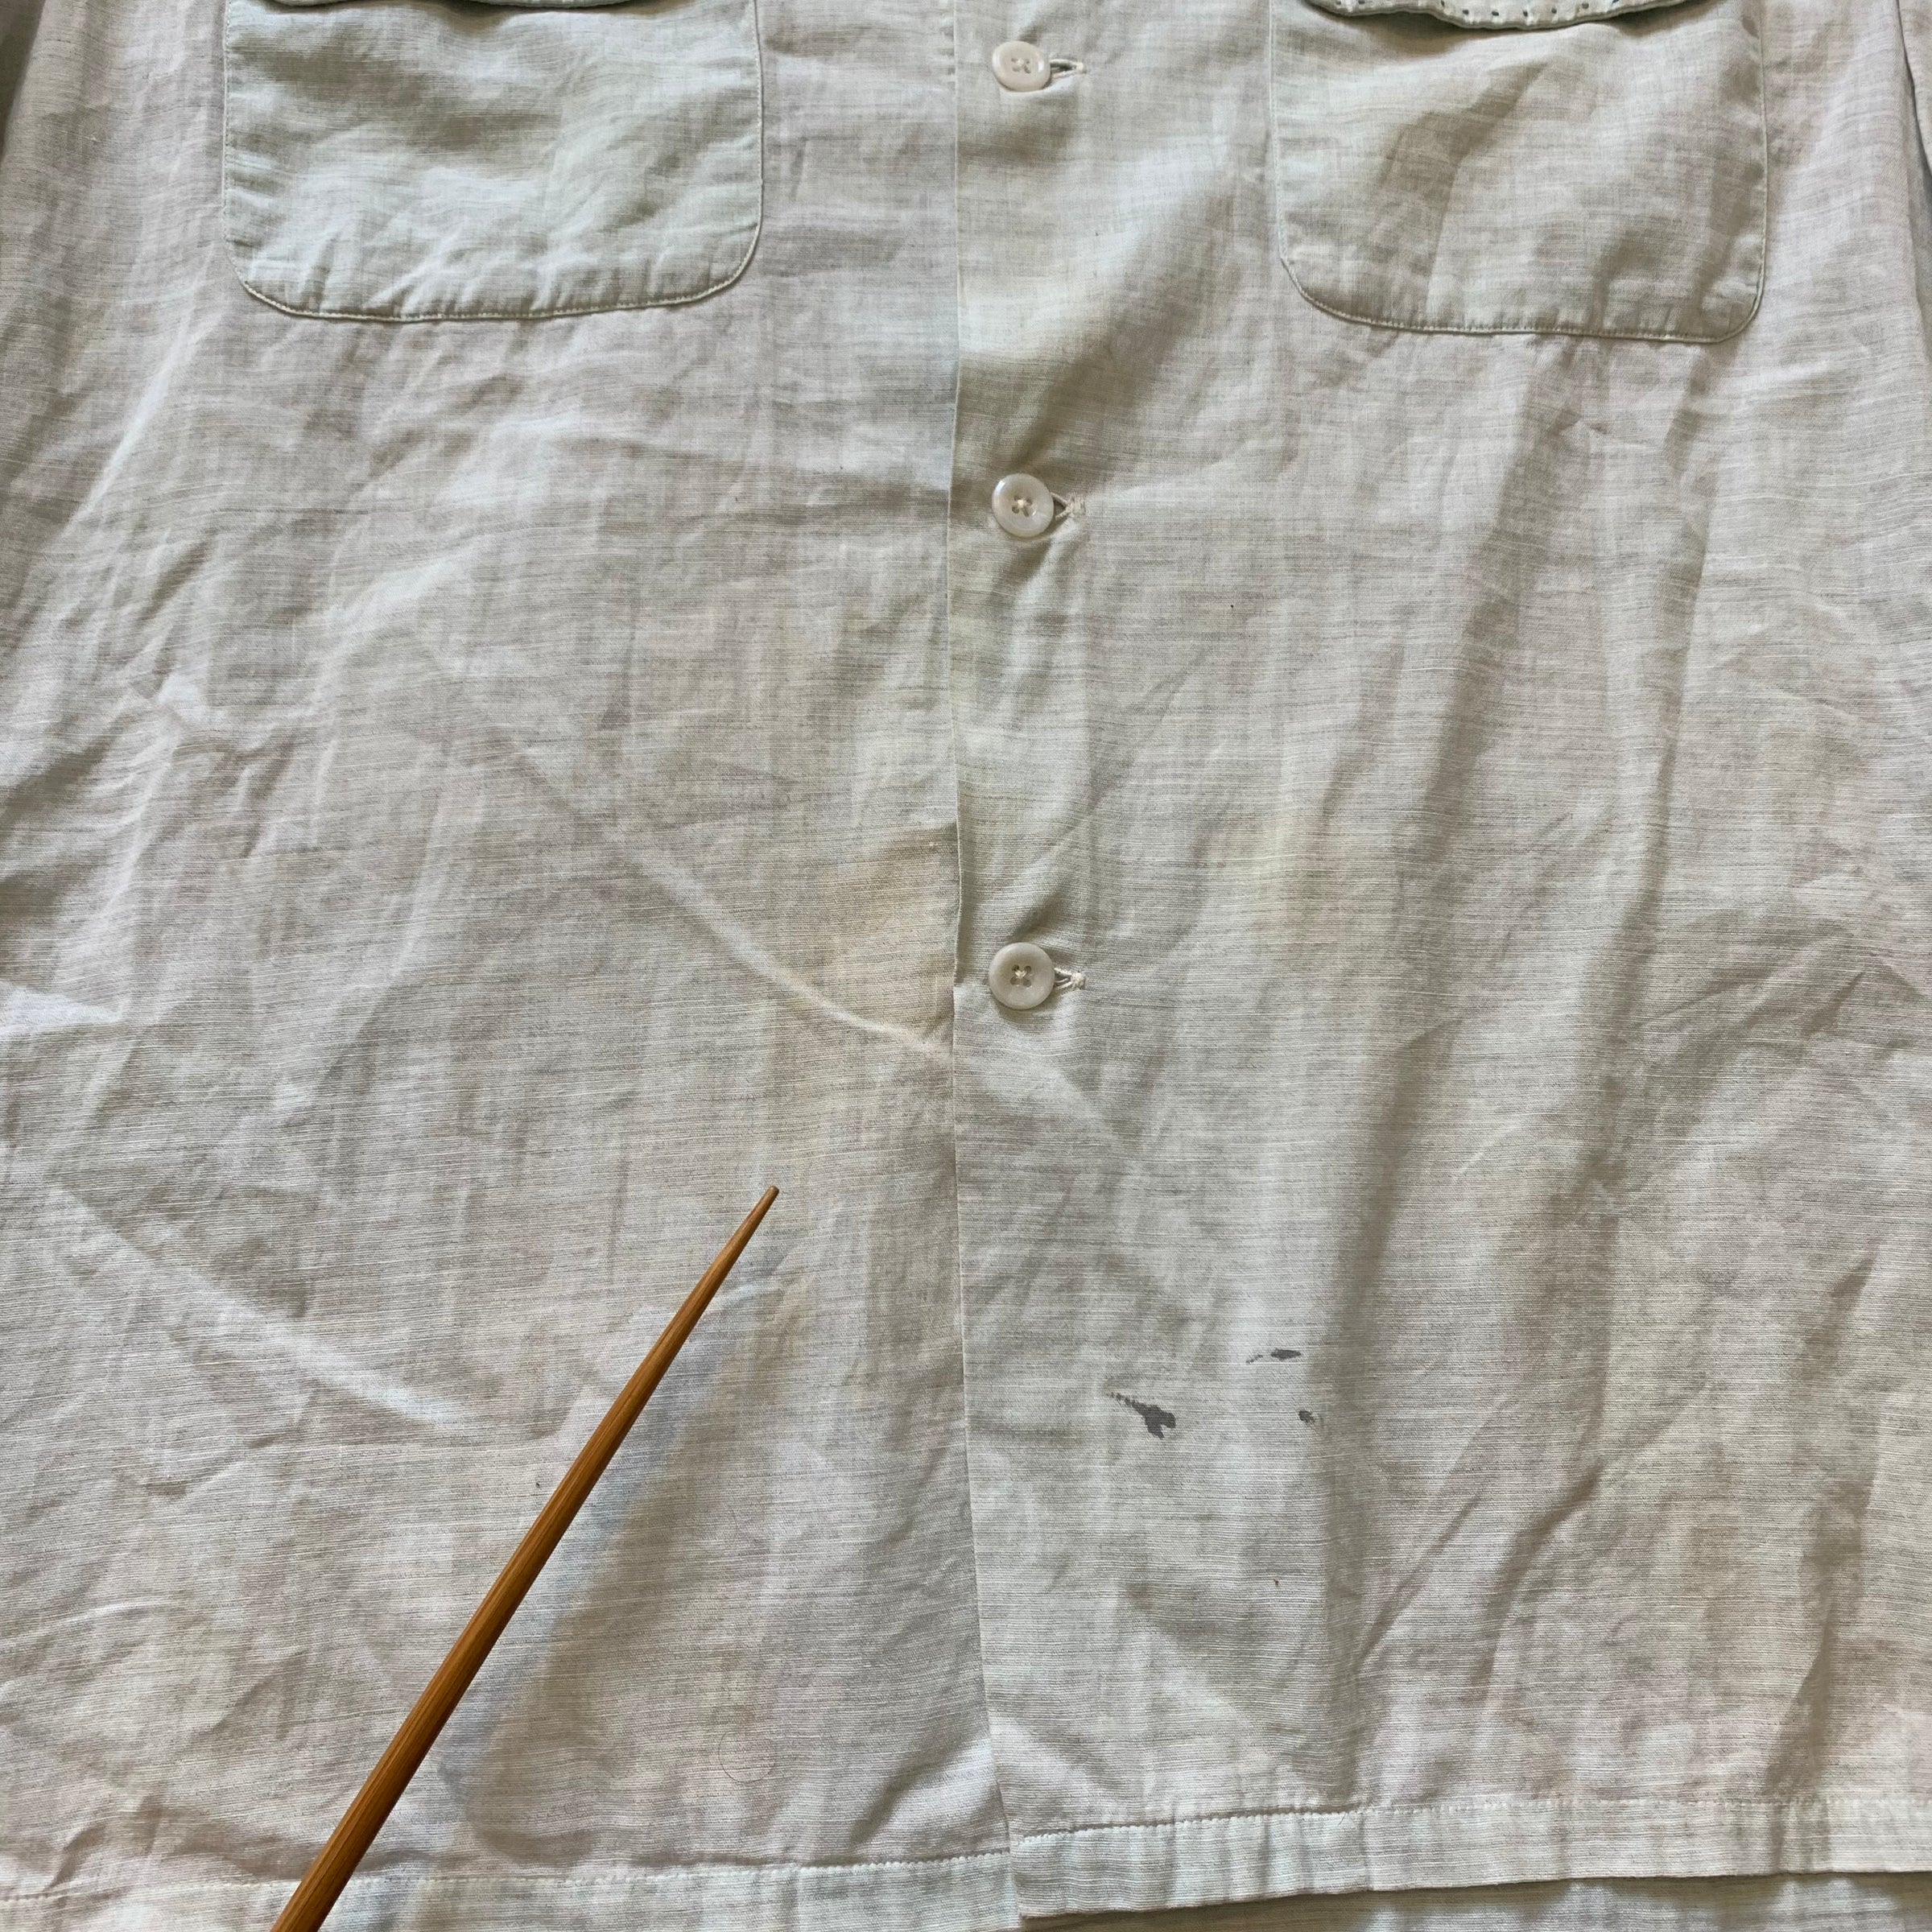 1950's Penney's Towncraft Loop Collar Cotton Linen Shirt Medium